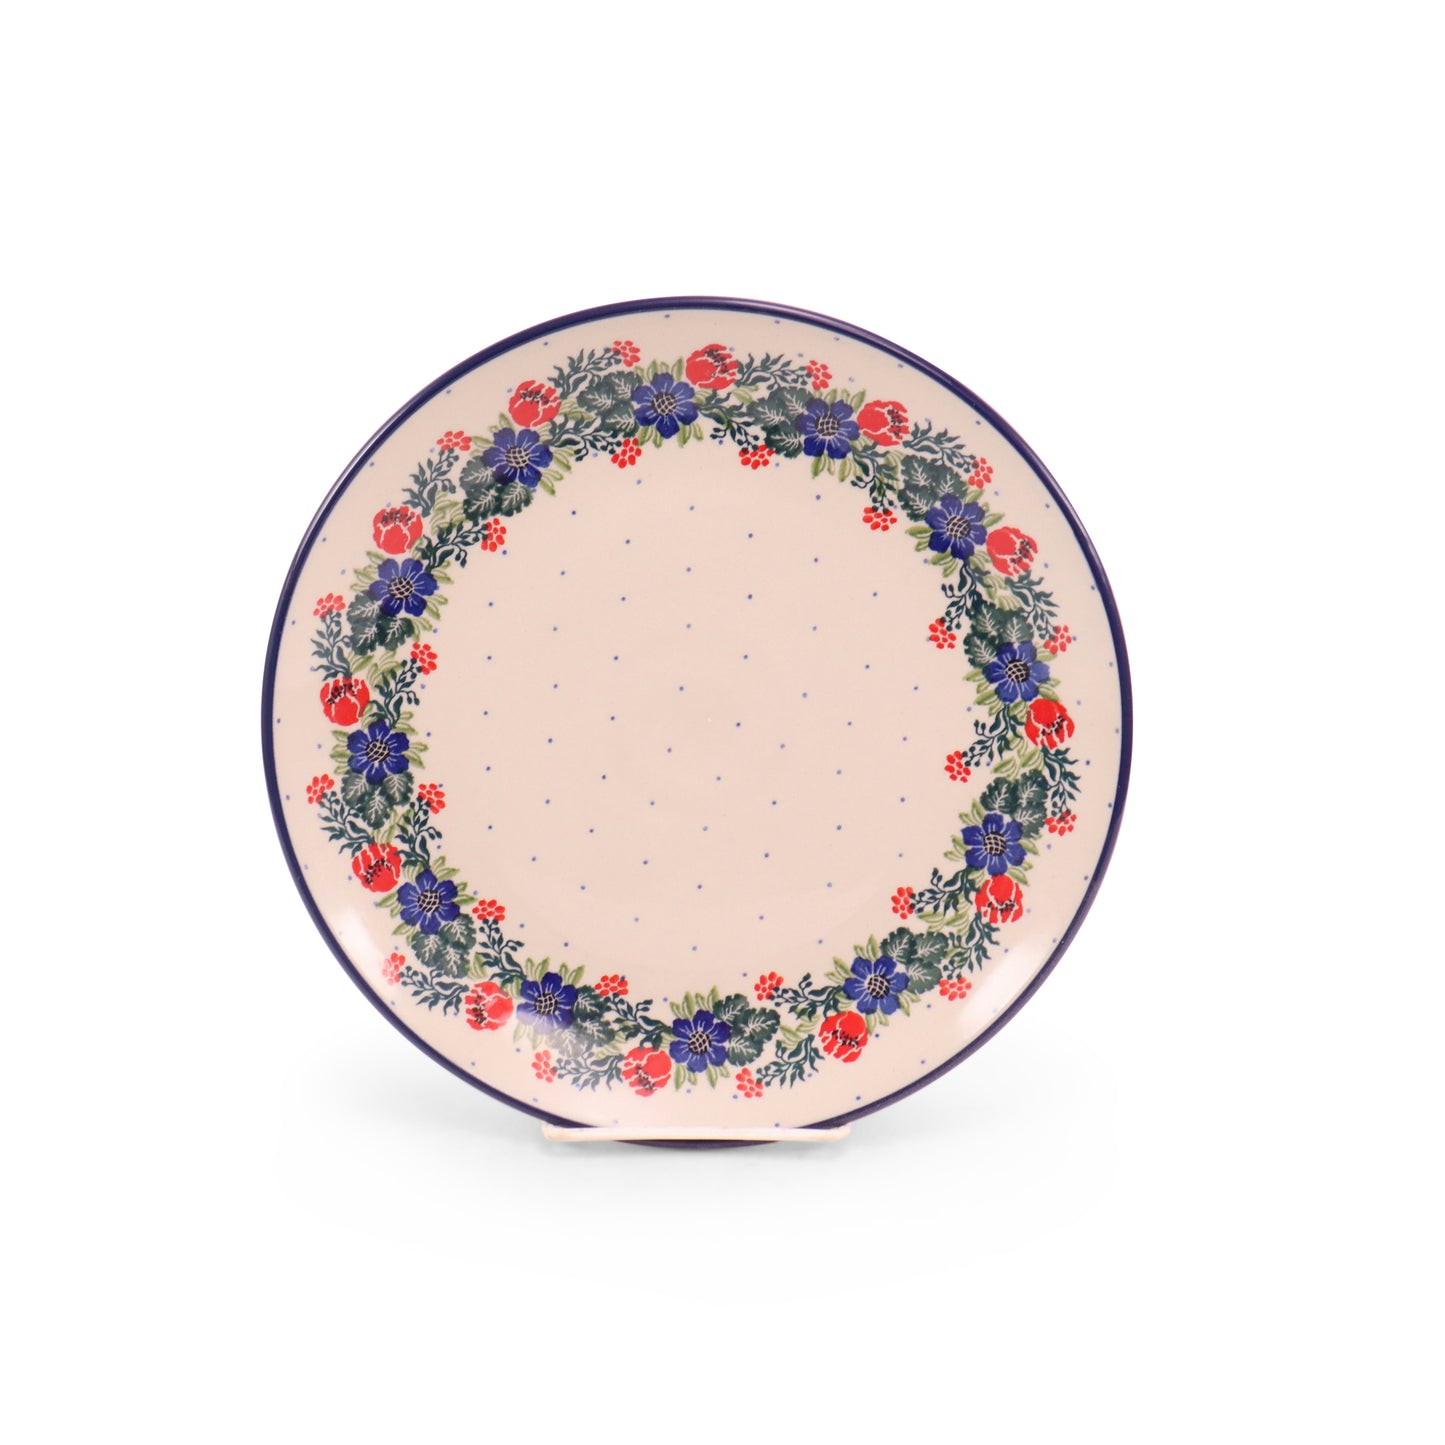 10" Dinner Plate. Pattern: Around the Clock